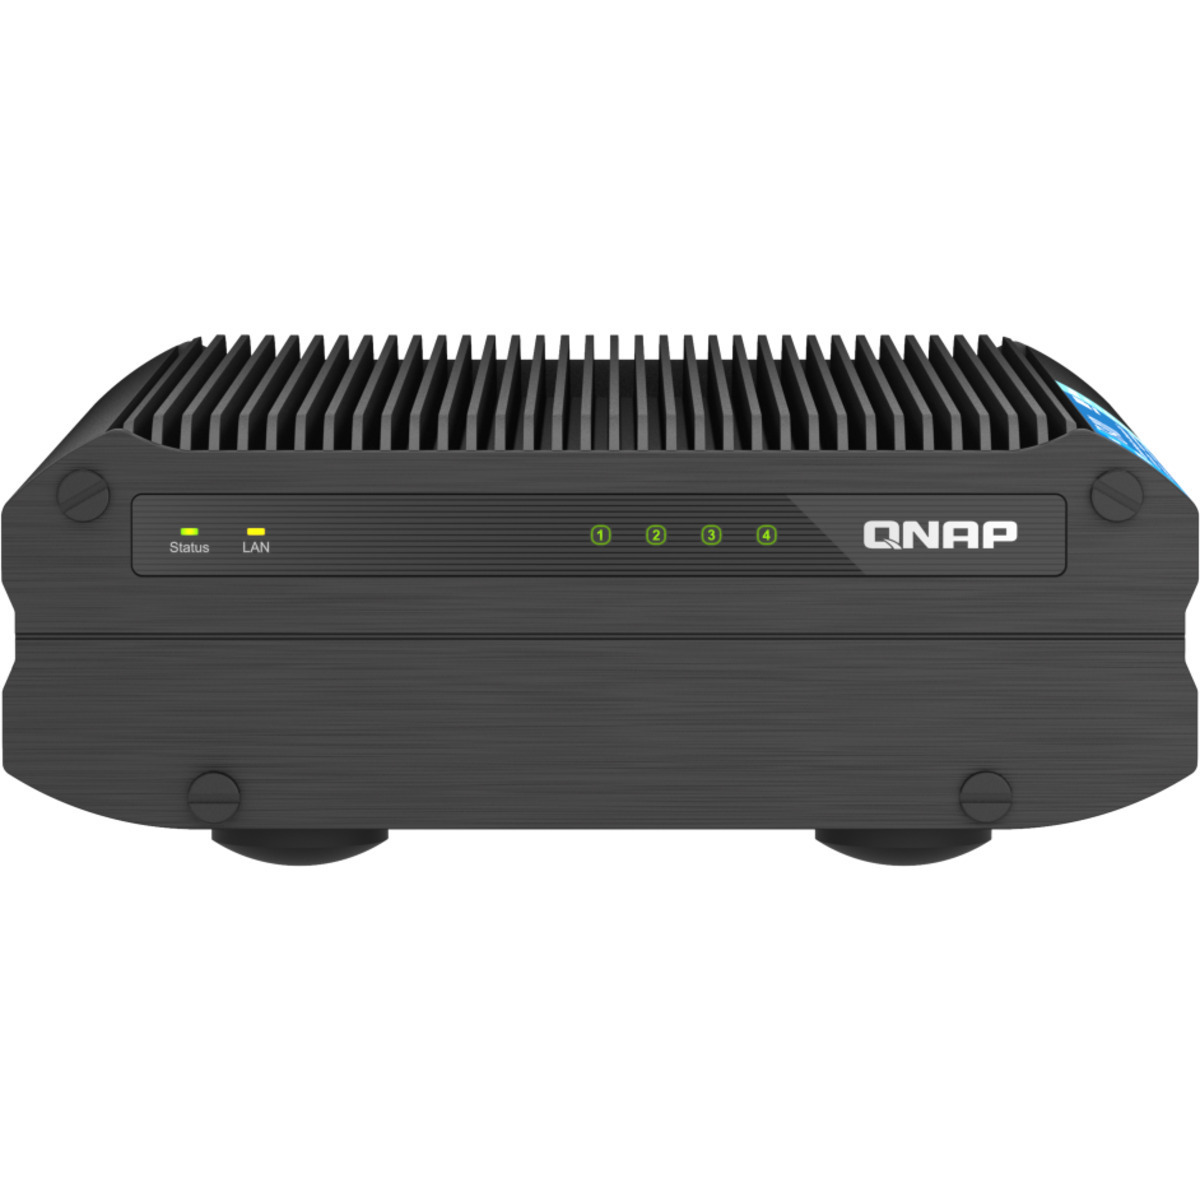 QNAP TS-i410X 4tb 4-Bay Desktop Multimedia / Power User / Business NAS - Network Attached Storage Device 2x2tb Samsung 870 QVO MZ-77Q2T0 2.5 560/530MB/s SATA 6Gb/s SSD CONSUMER Class Drives Installed - Burn-In Tested TS-i410X